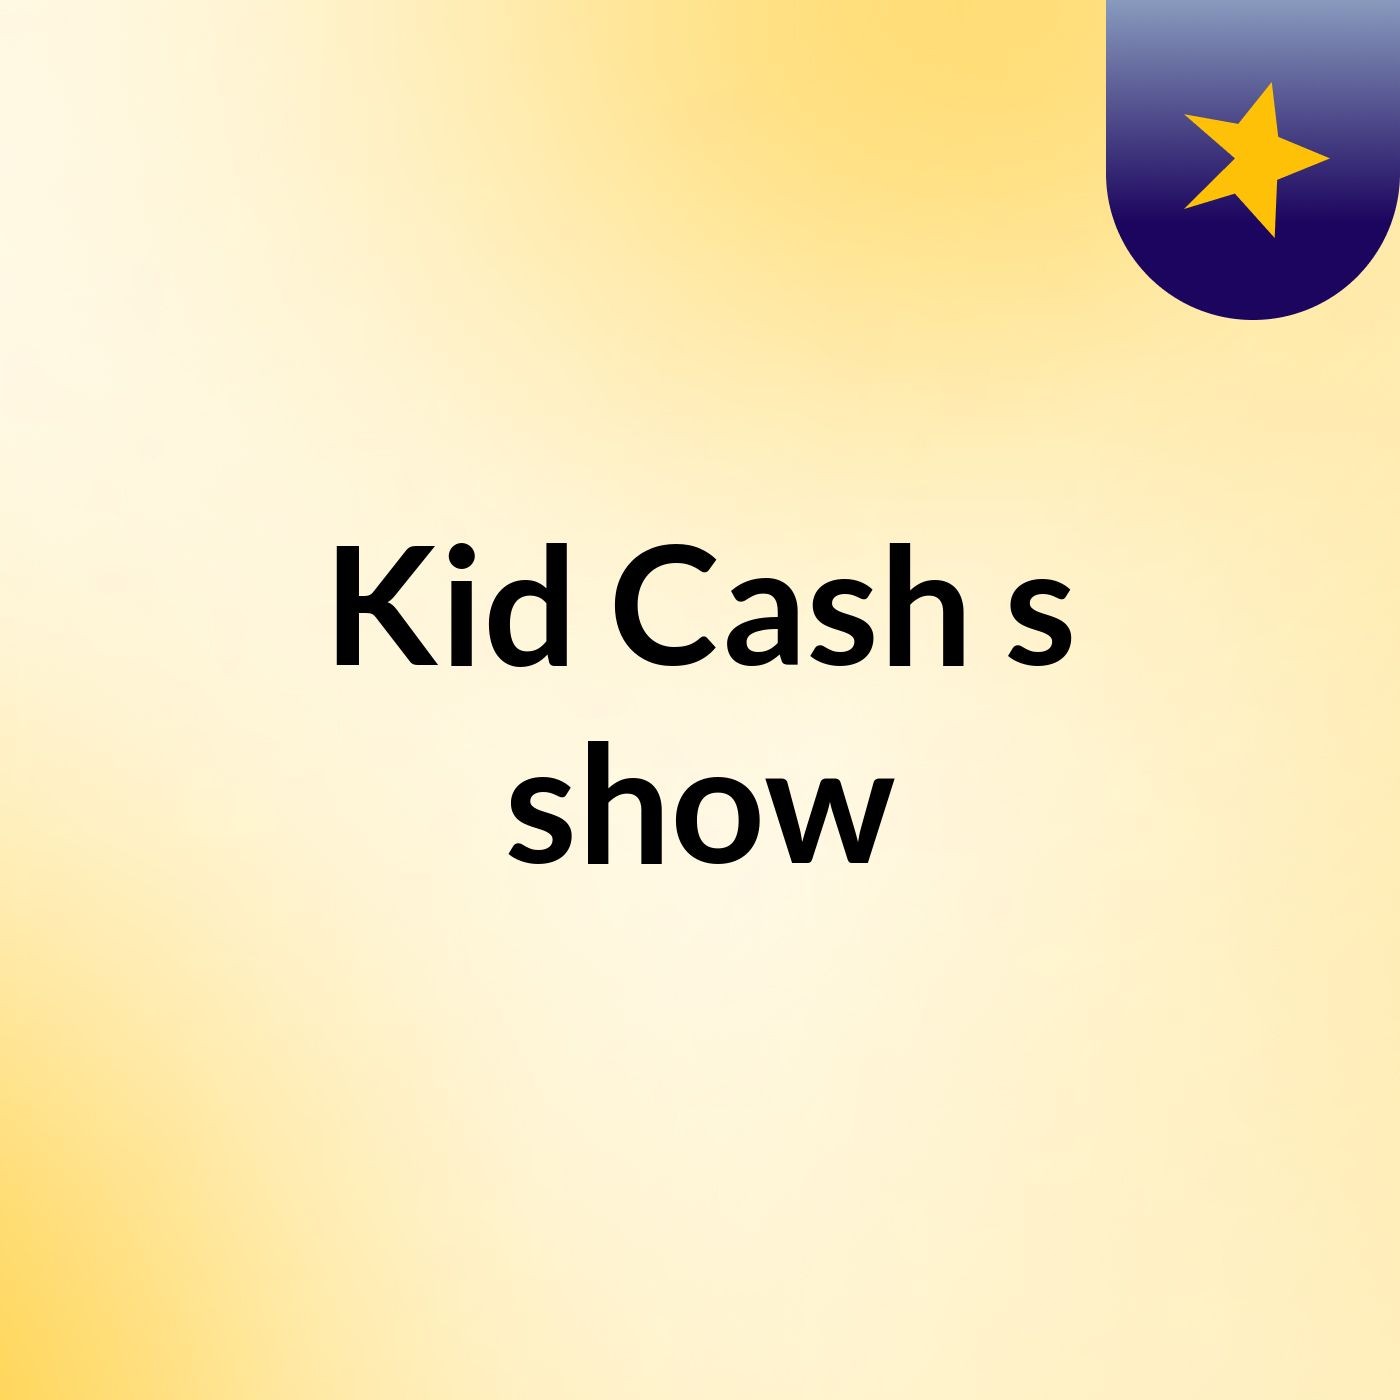 Kid Cash's show